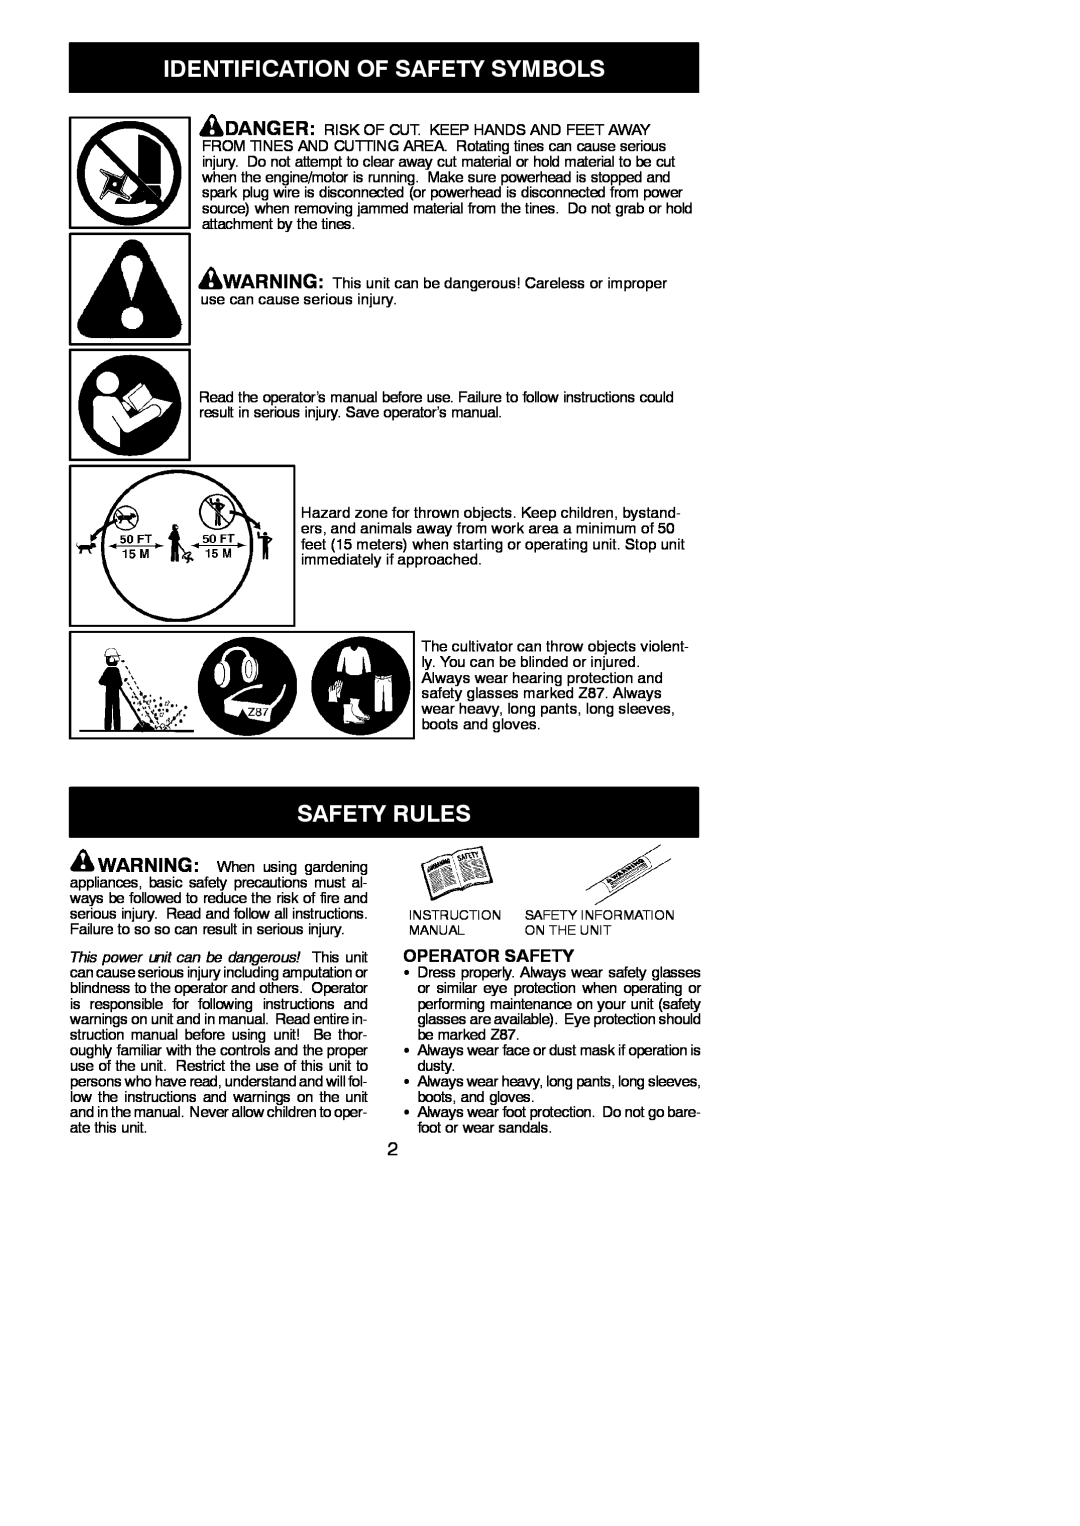 Poulan 952711608, 545212825 instruction manual Identification Of Safety Symbols, Safety Rules, Operator Safety 